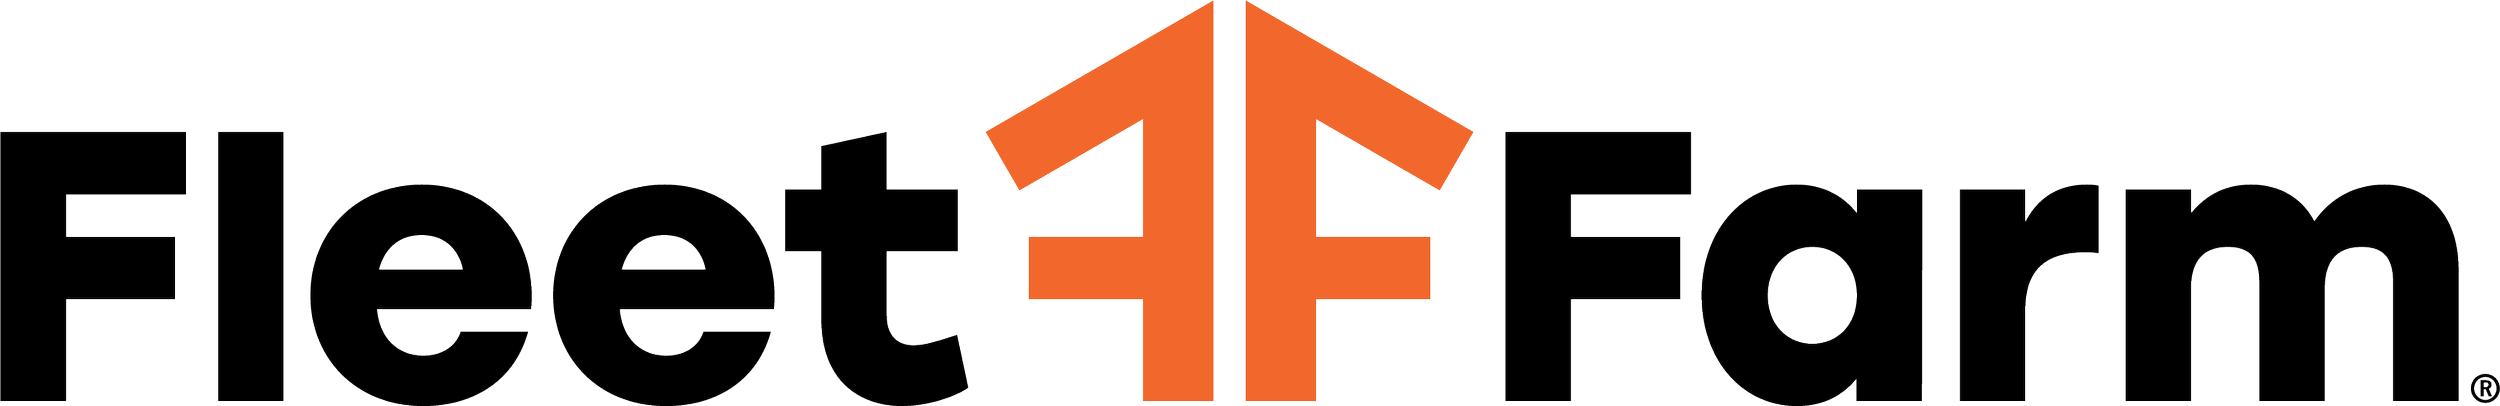 Fleet Farm Logo.png